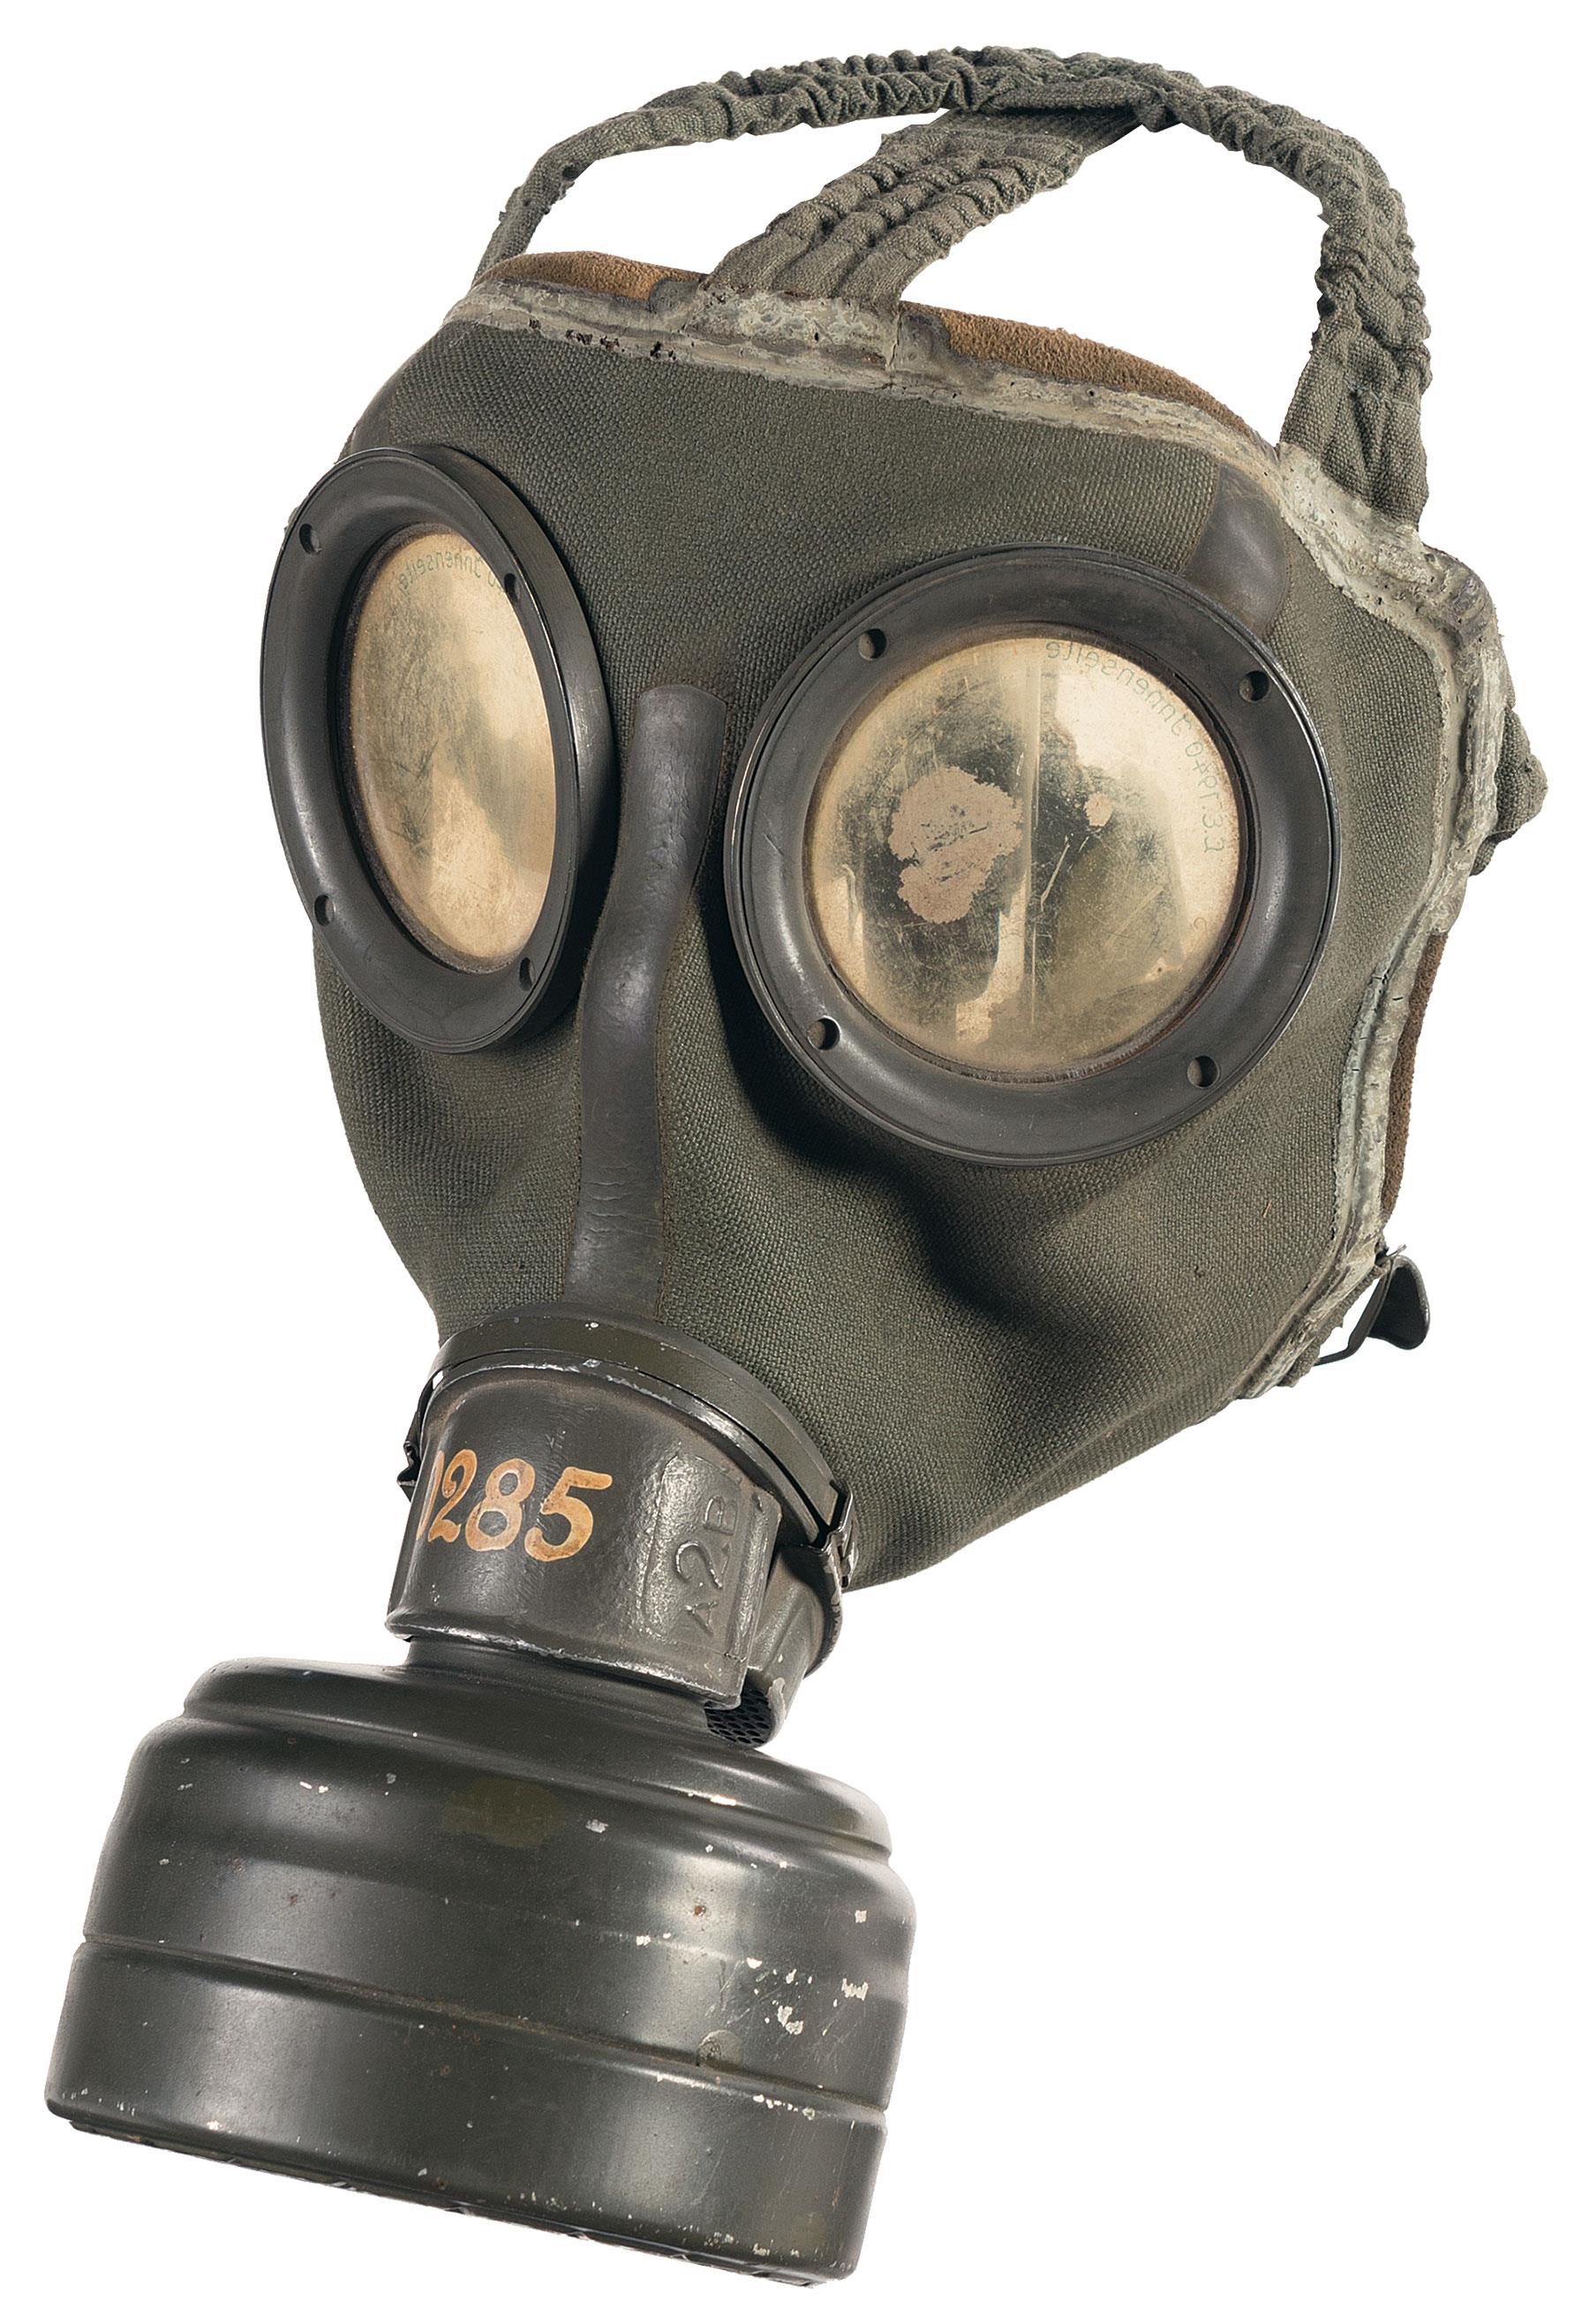 Rare Early World War II German Fallschirmjager Gas Mask with Bag